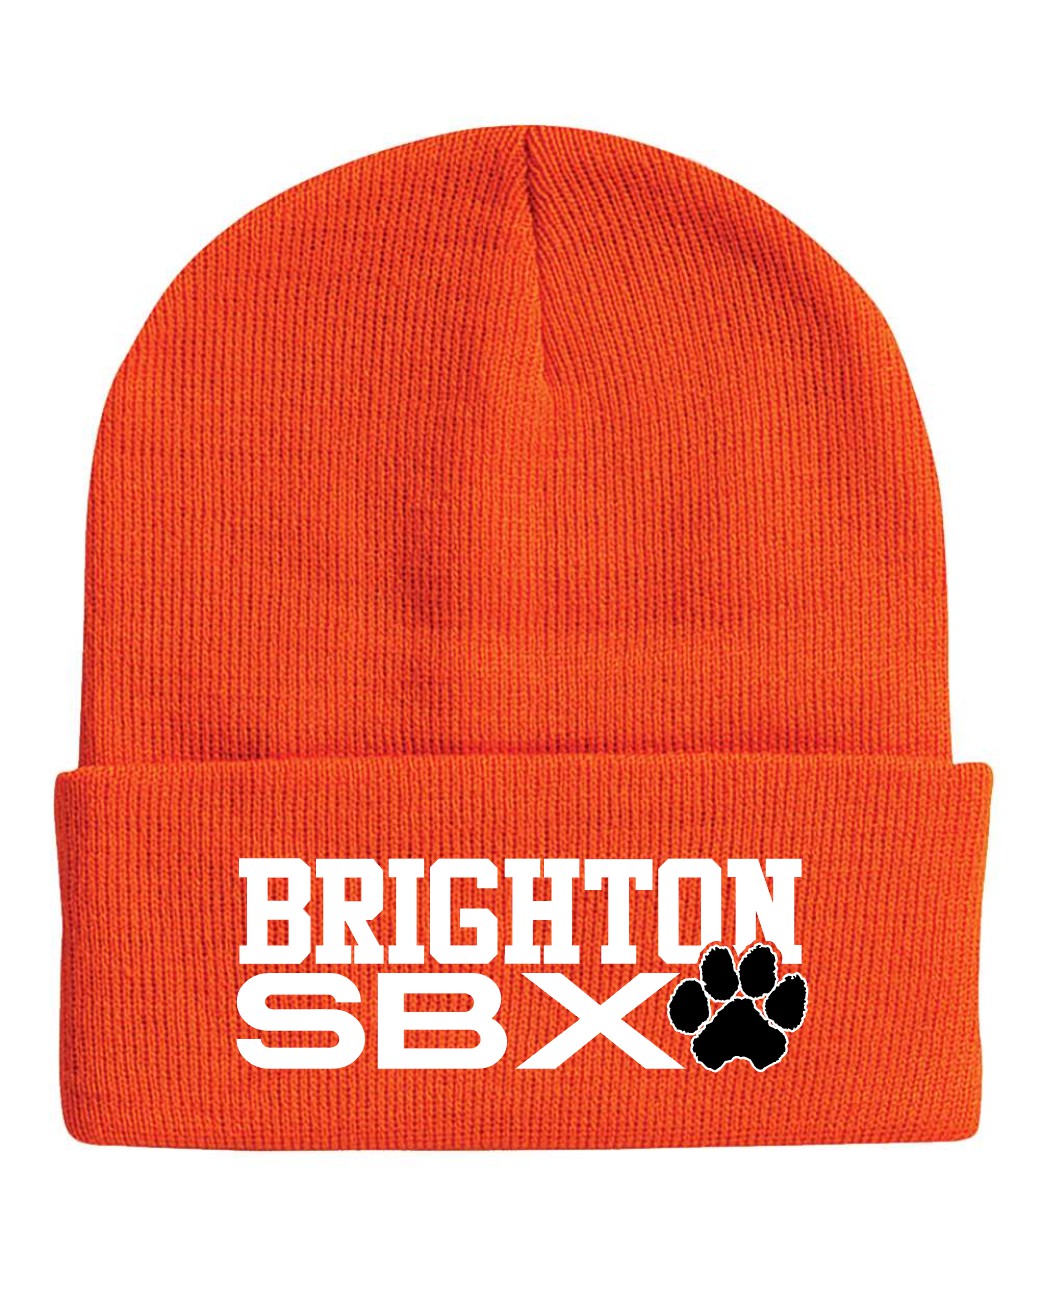 Brighton SBX Beanie